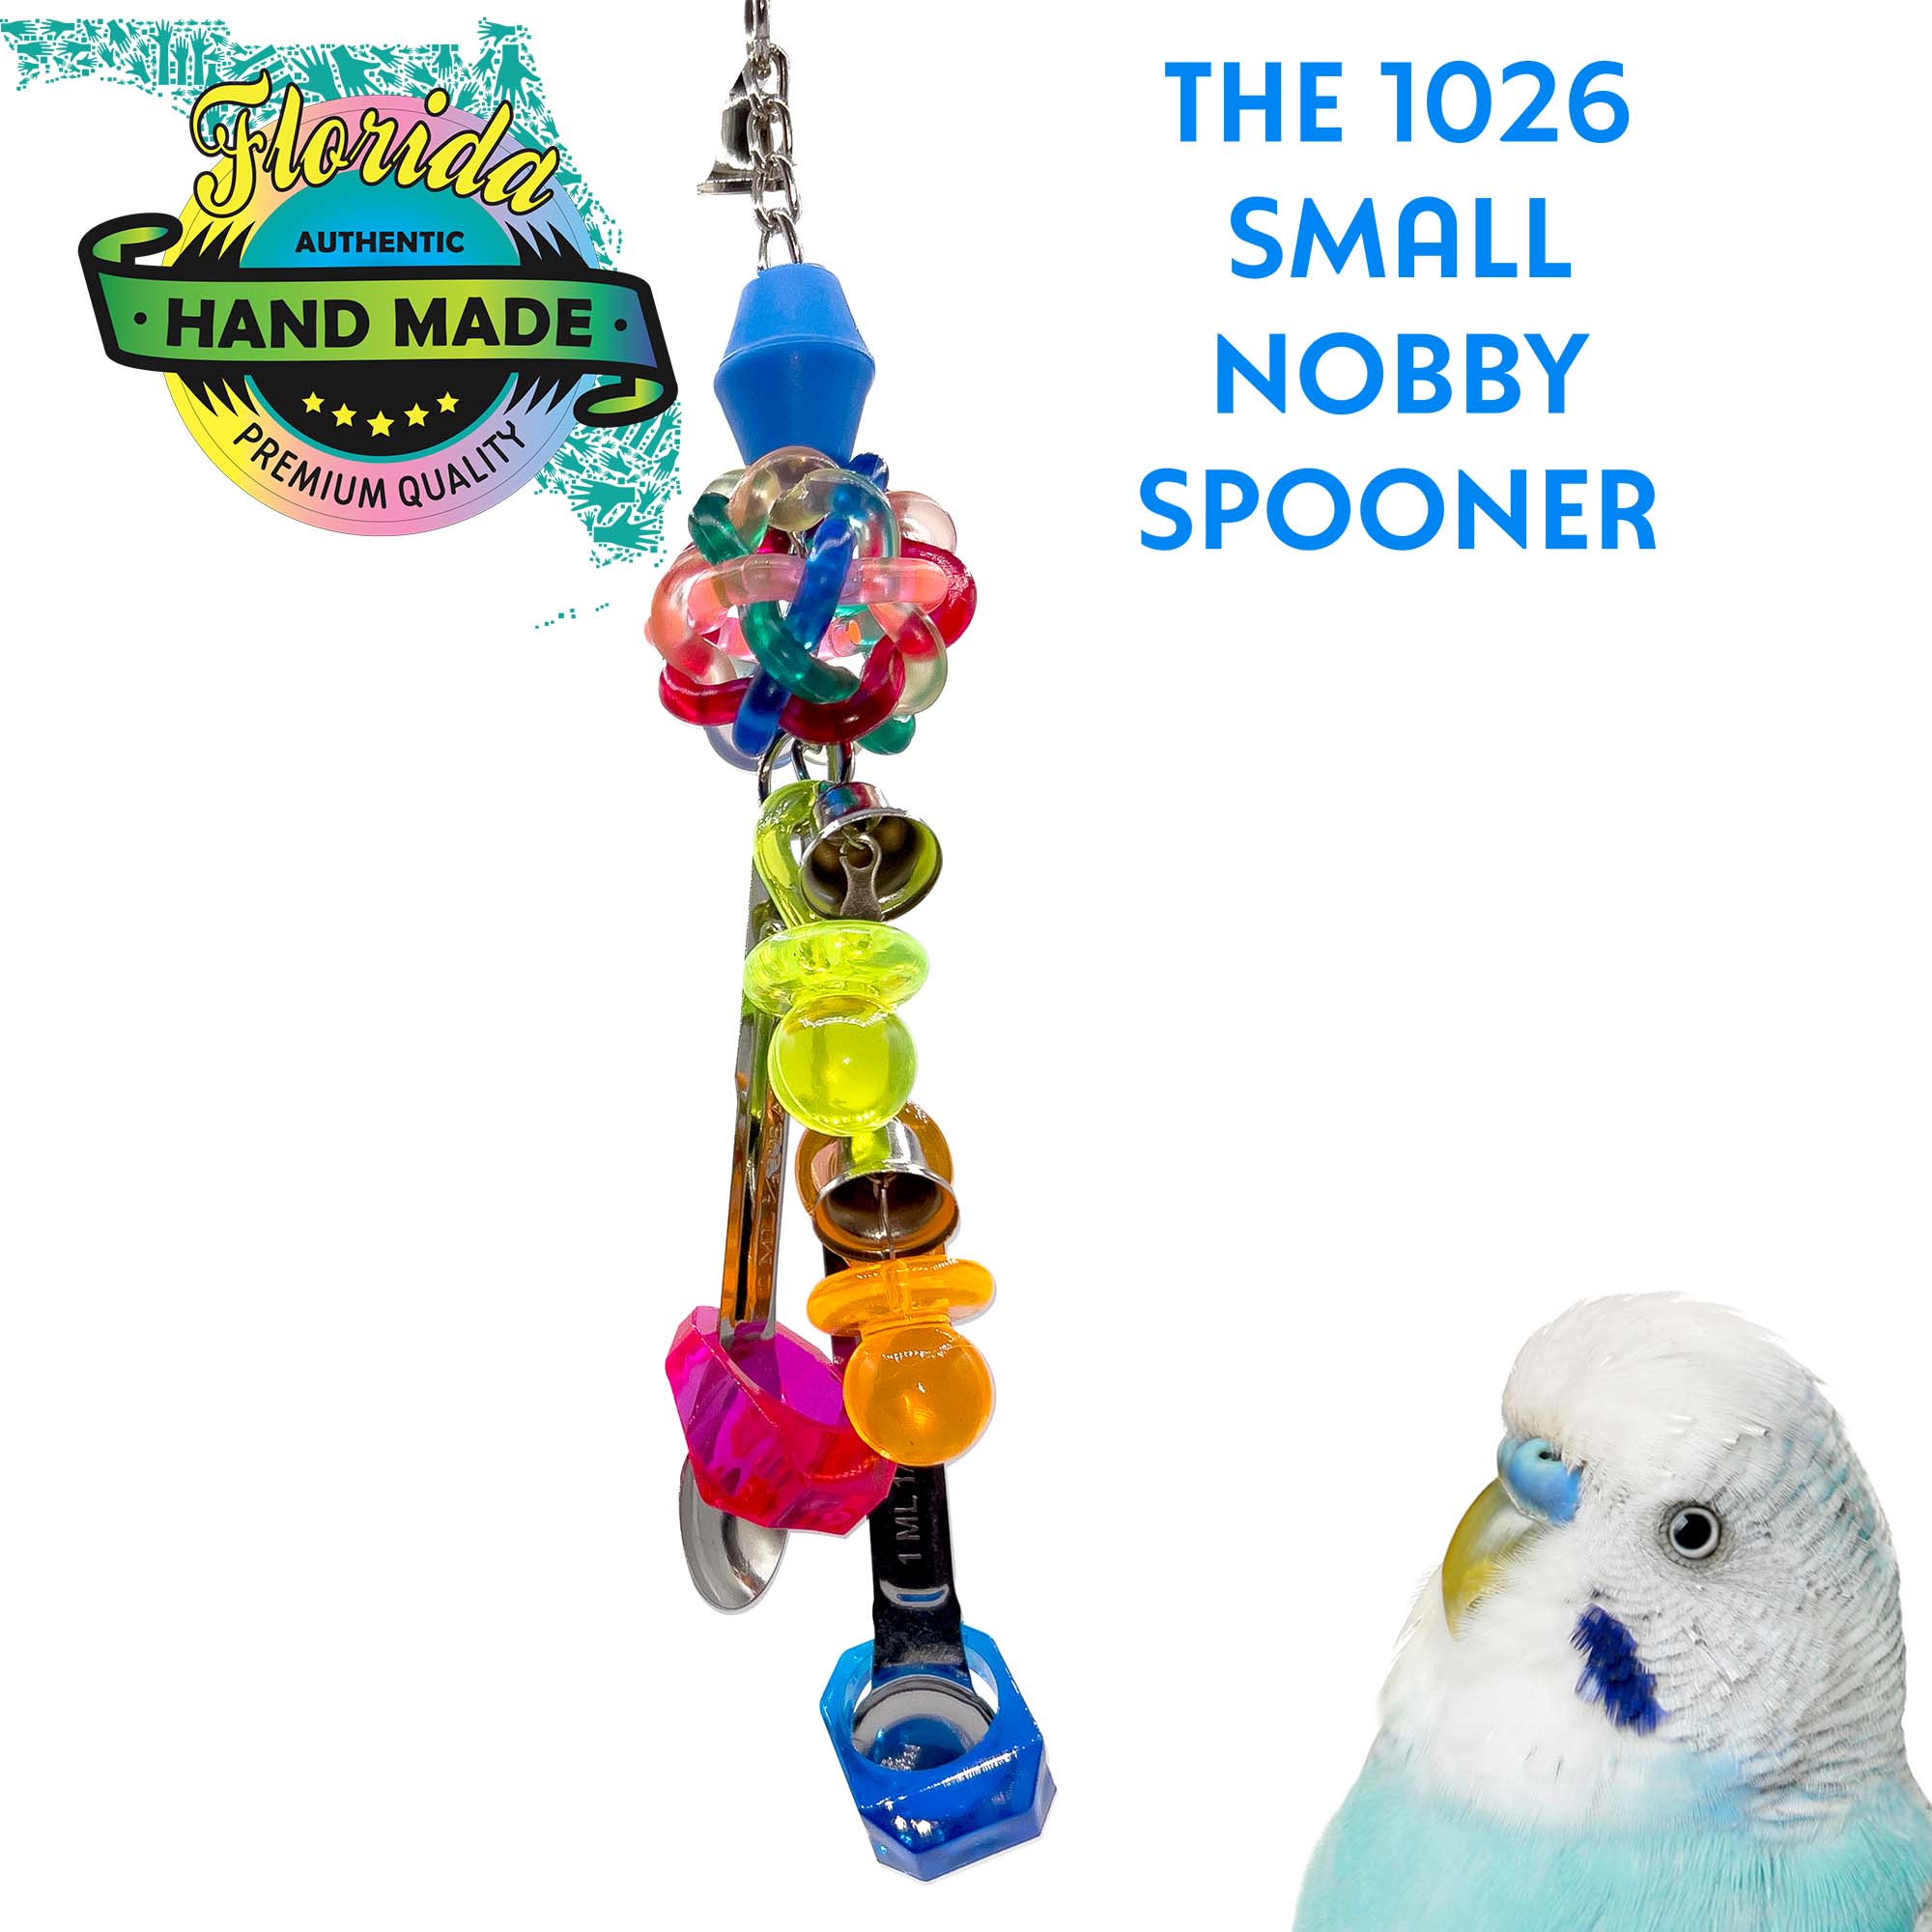 1026 Small Nobby Spooner